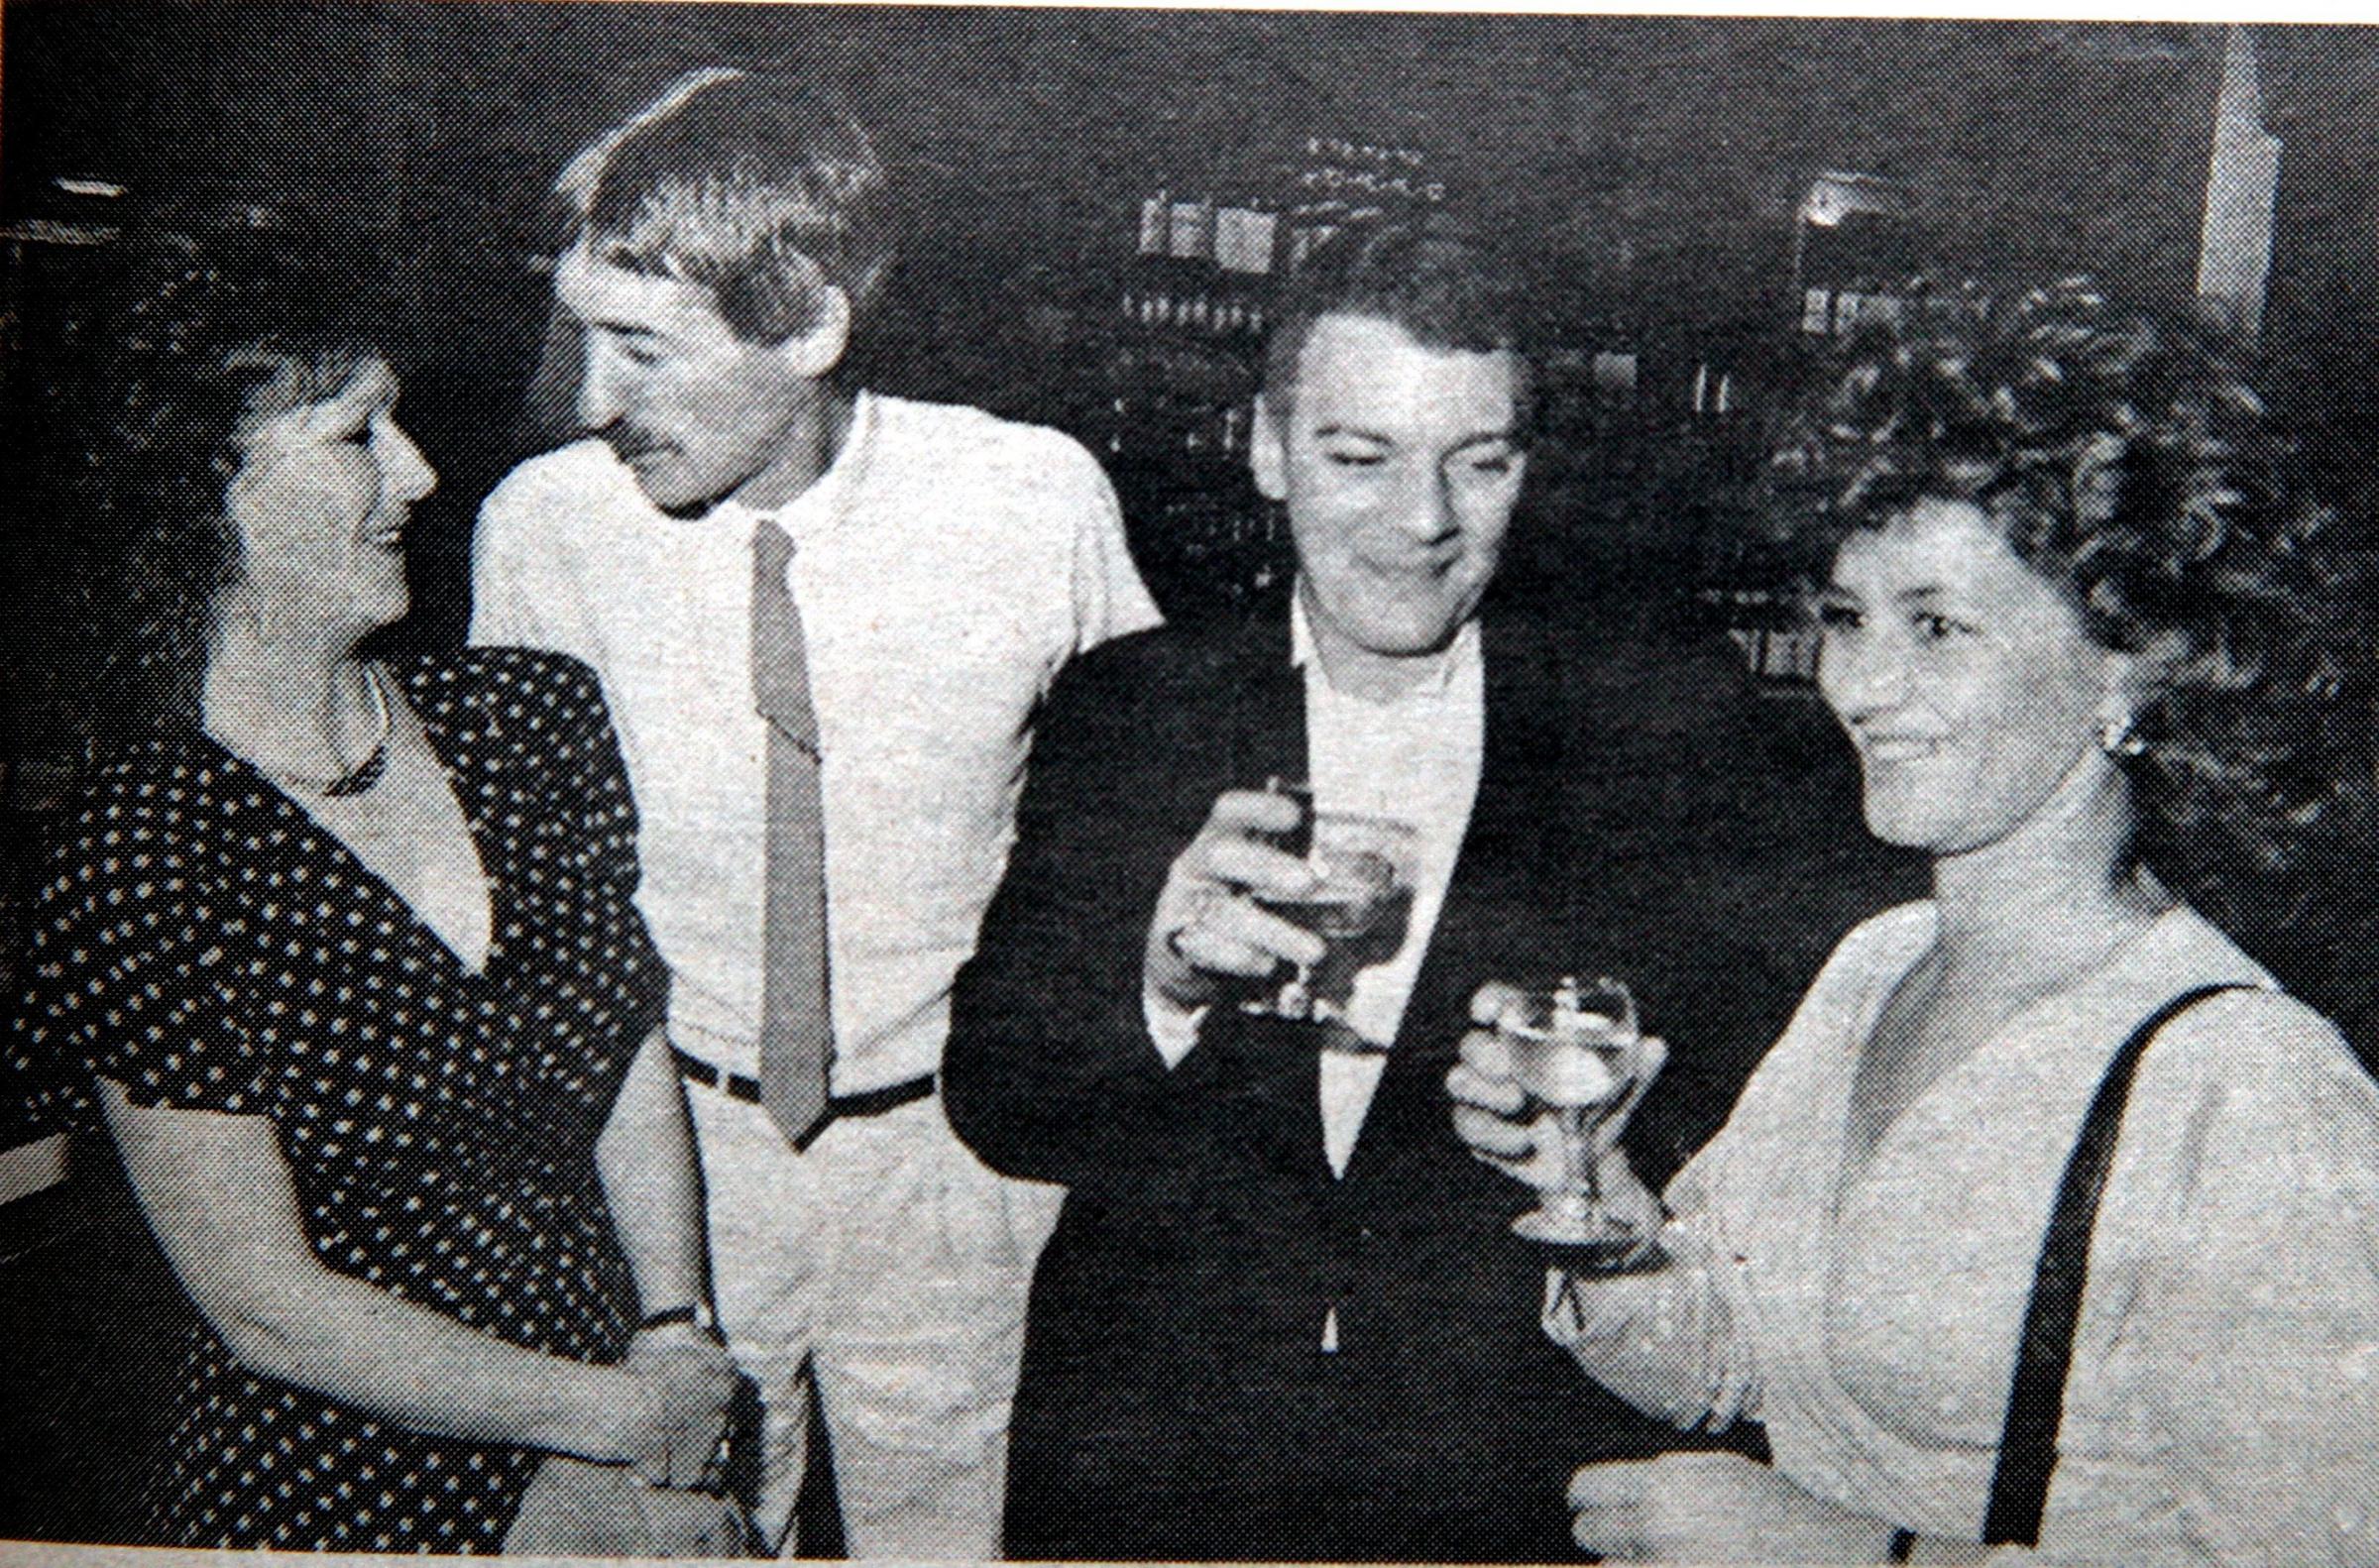 Opening of Scotts, October 1989 - Sharing a joke are Karen Hughes, Neville Owen, Pete Jones and Kathy Guy.